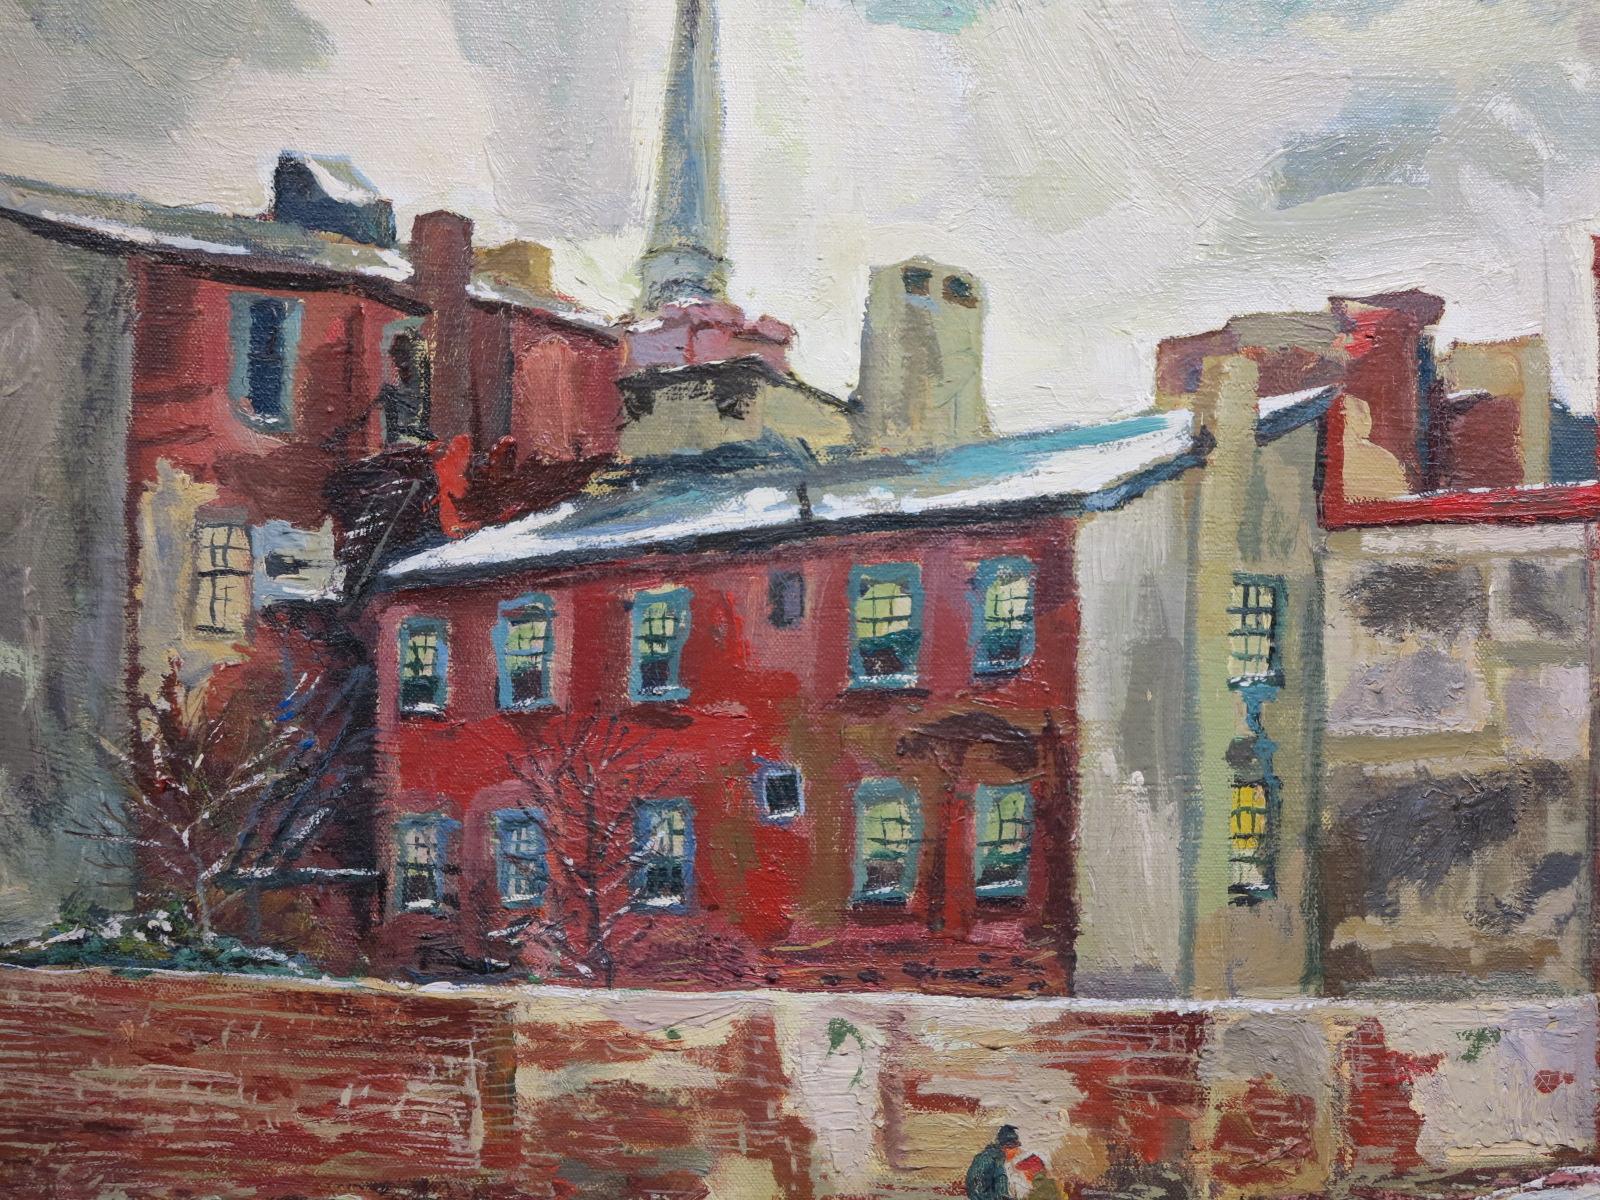 Society Hill, Philadelphia (Urban cityscape painting) - Painting by Benjamin Eisenstat